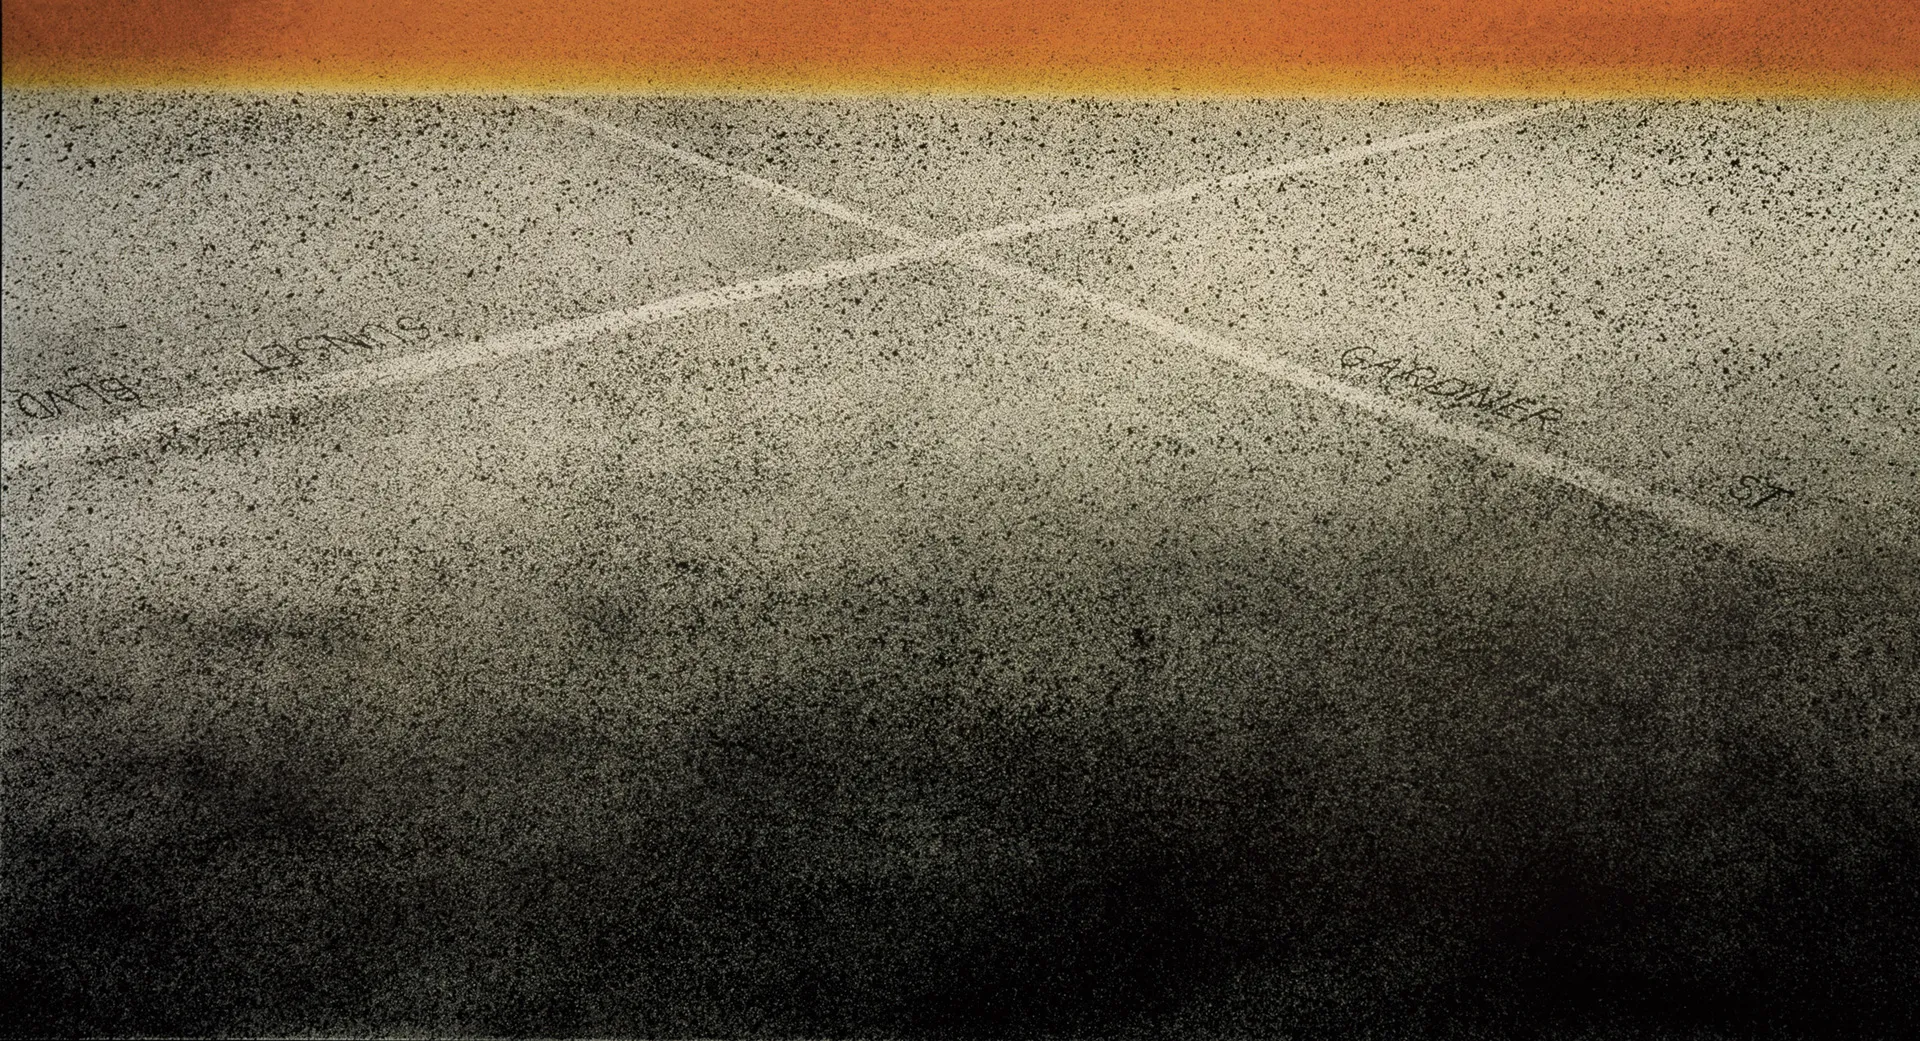 Ed Ruscha - Sunset-Gardner Cross, 1998-99, acrylic on canvas